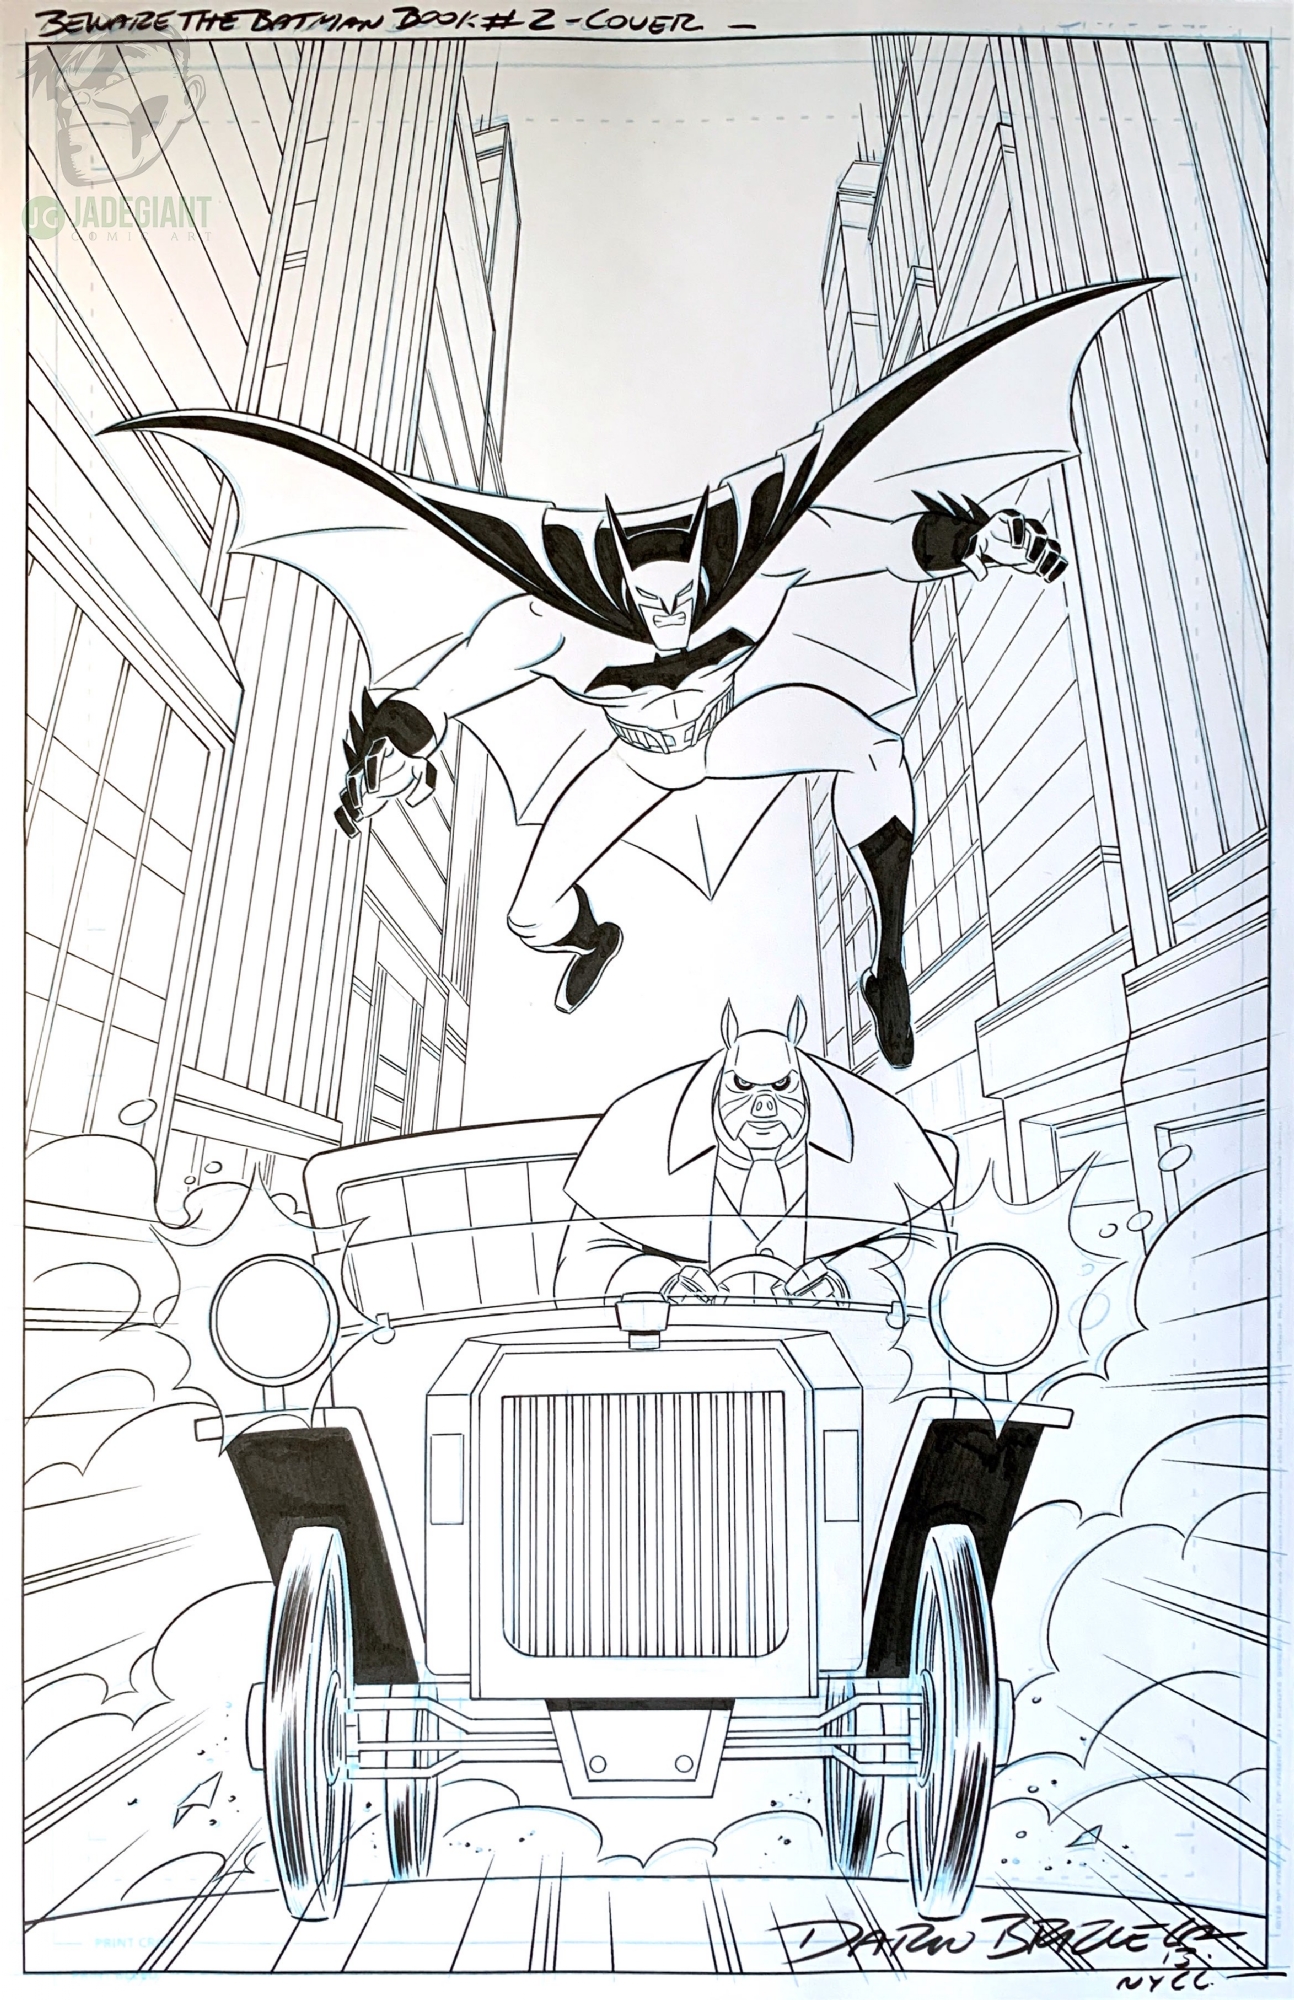 2014 Beware the Batman issue 2 cover by Dario Brizuela Comic Art